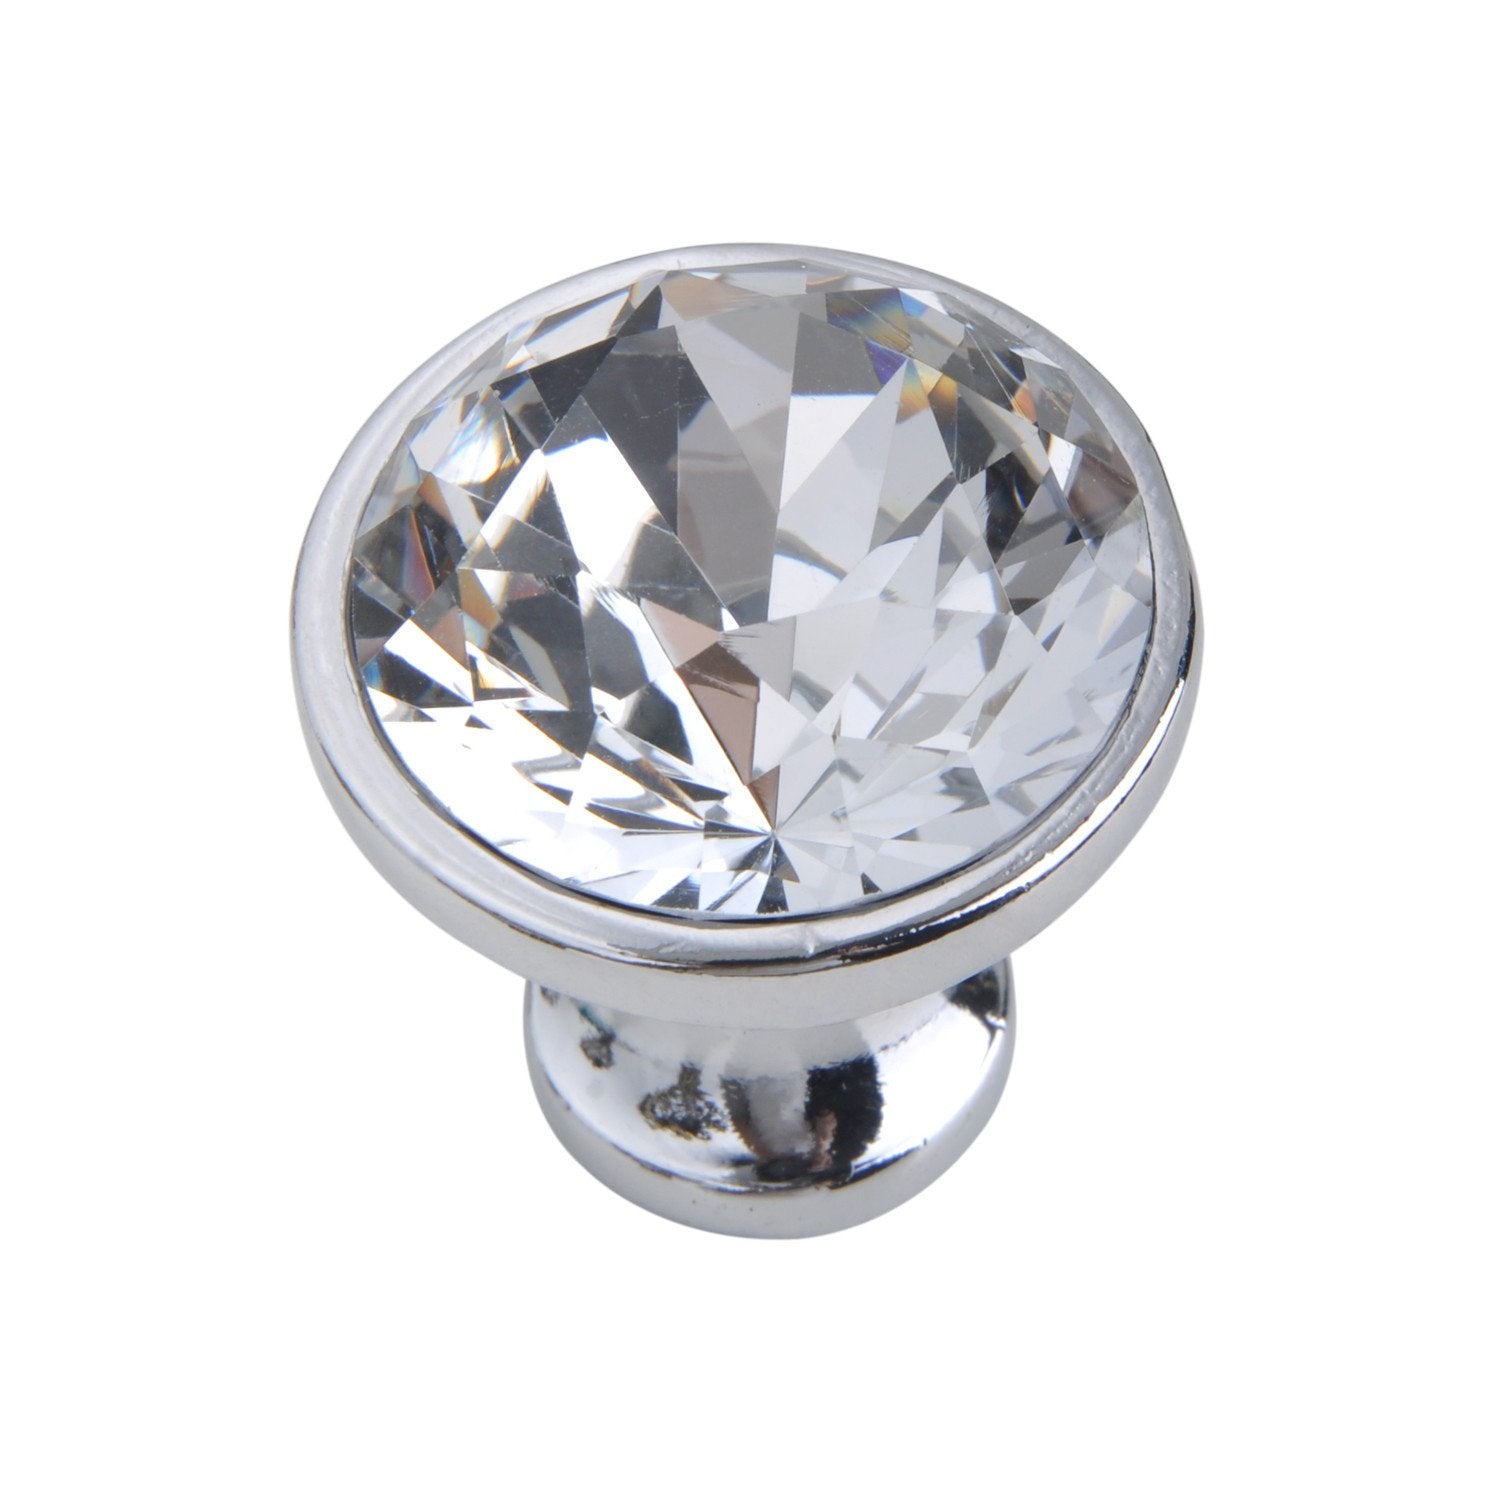 Gleam Polished Chrome and Crystal Cabinet Knob 1.25" - Loft97 - 1